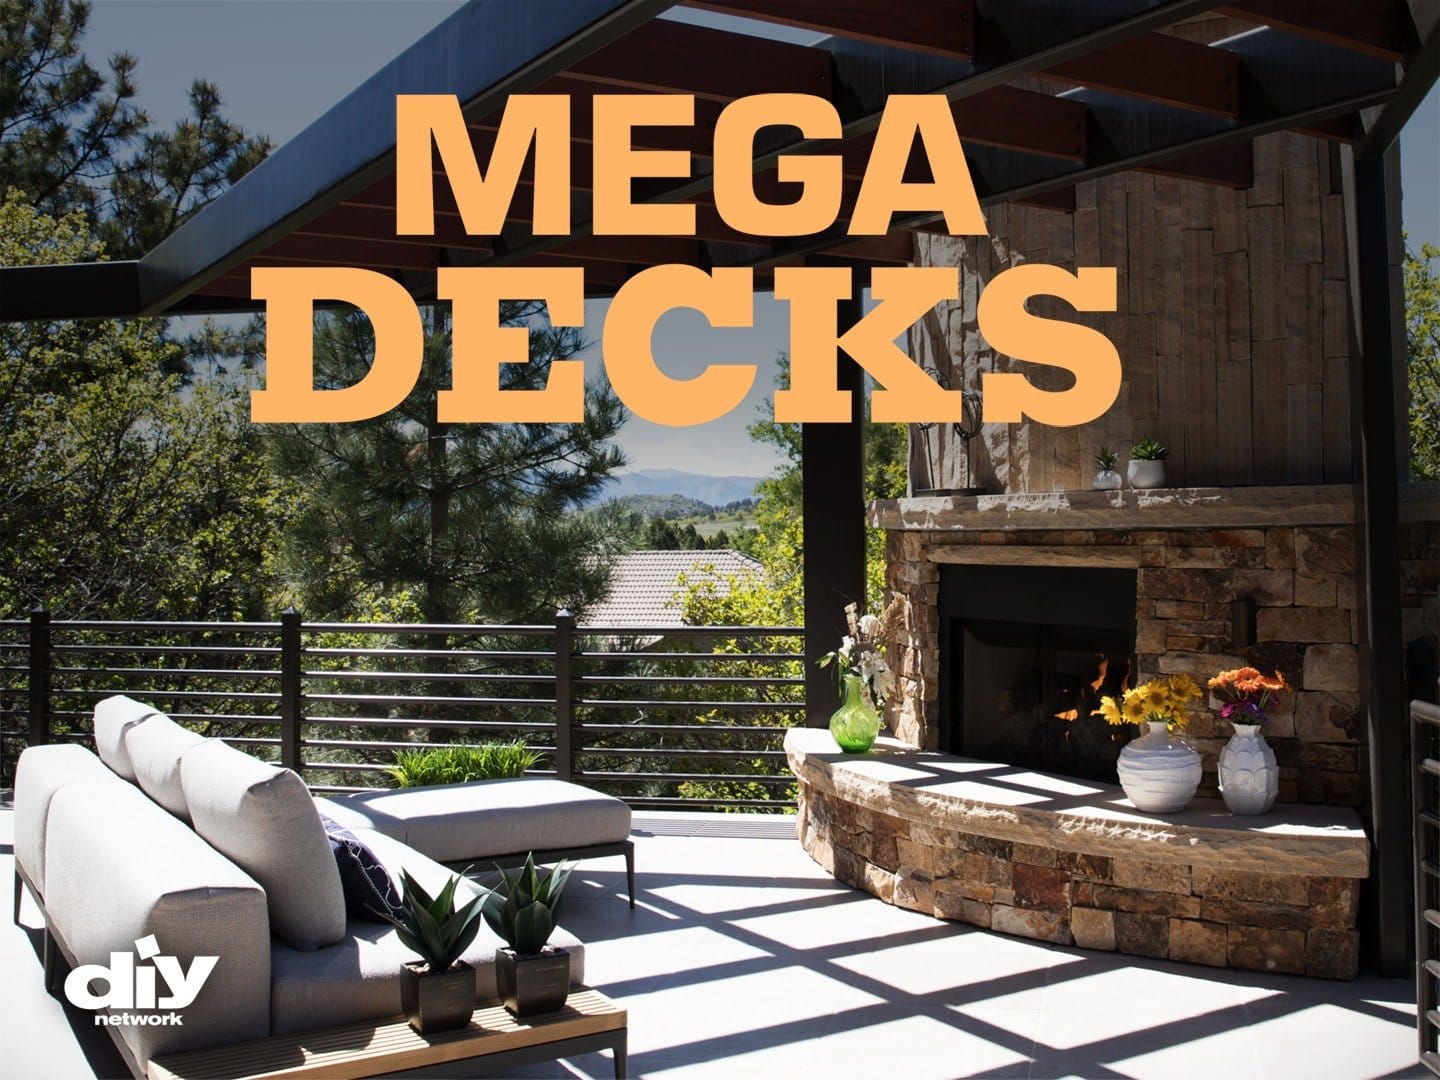 Mega Decks from the DIY Network